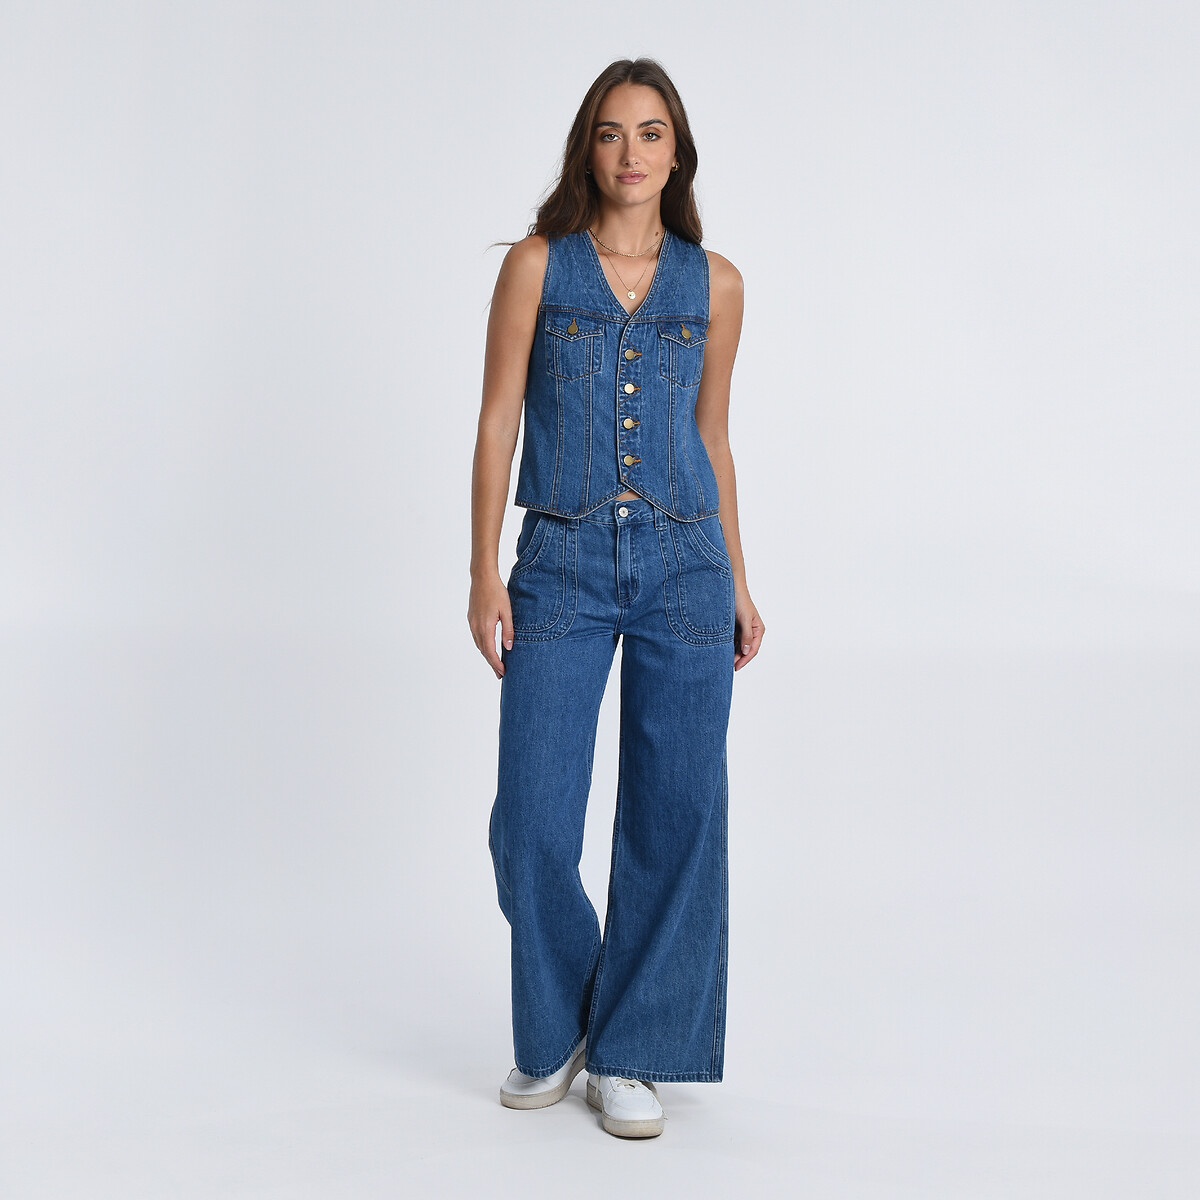 Жакет Без рукавов из джинсовой ткани S синий LaRedoute, размер S - фото 4